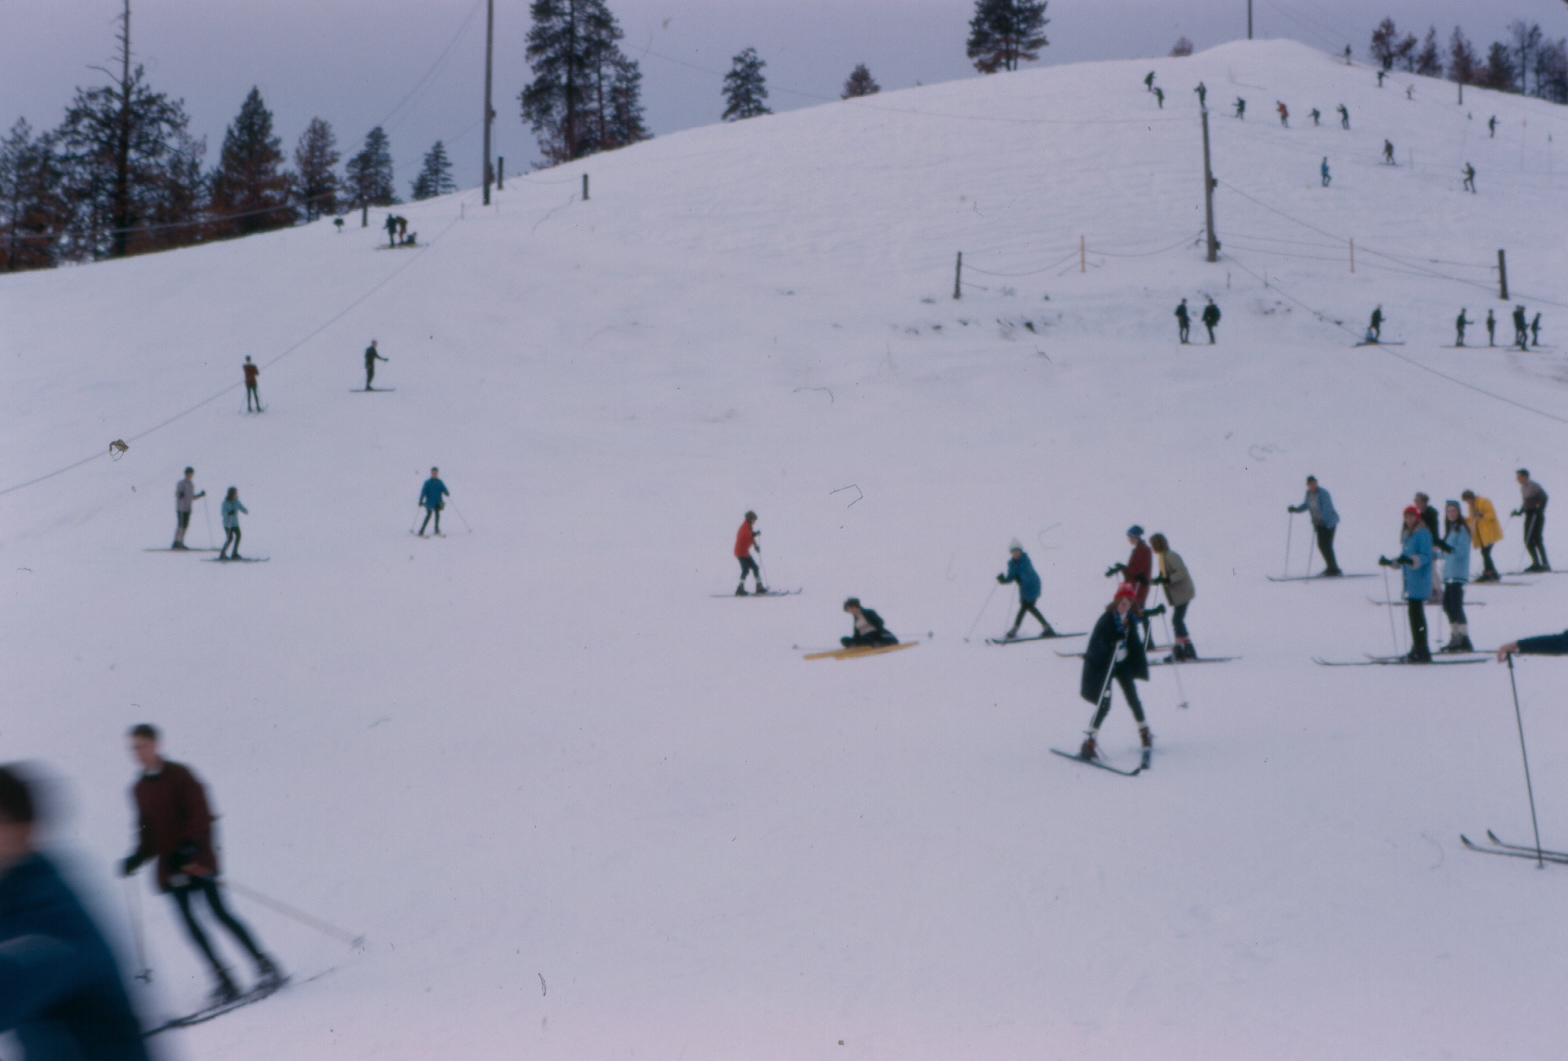 Echo valley skiing 1969